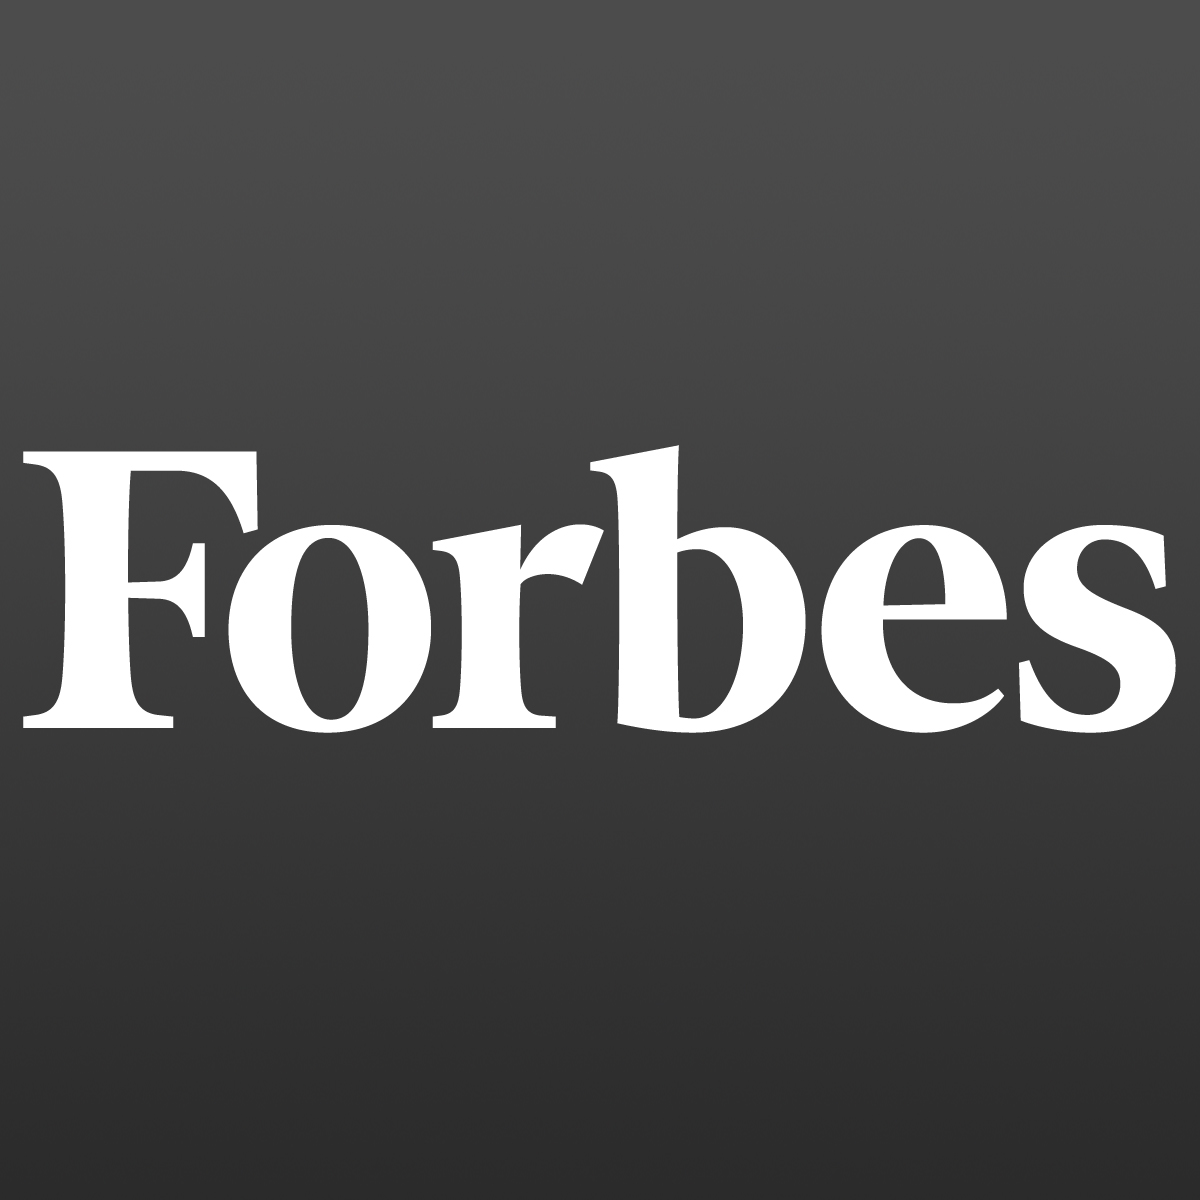 Forbes: Meet David Schwartz, Ripples Trillion Dollar Man